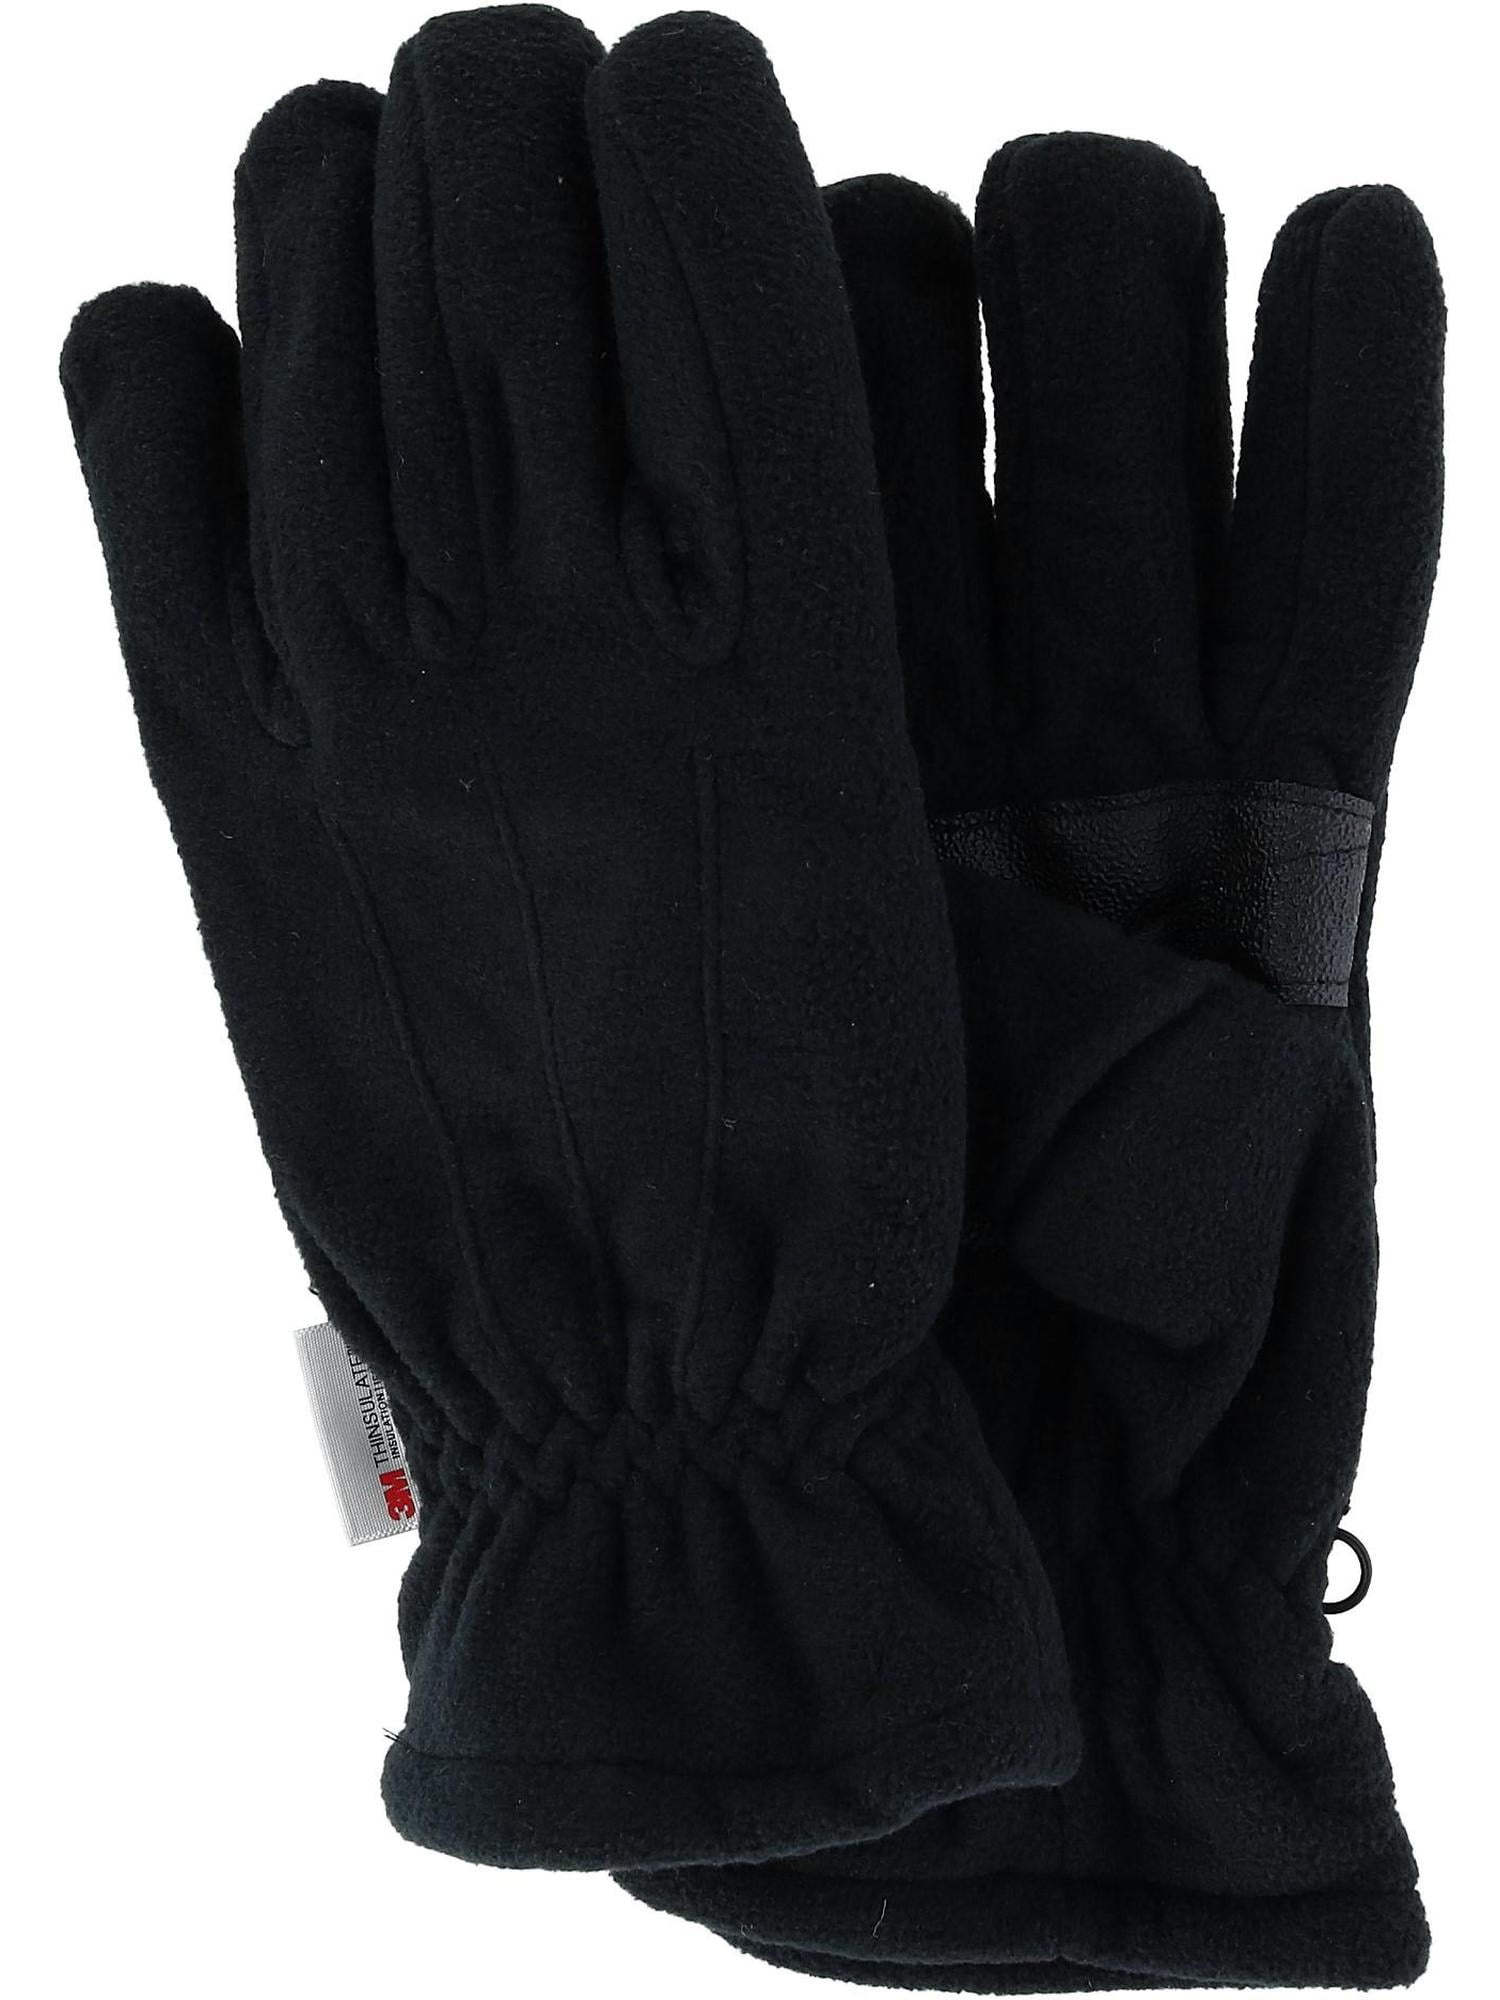 CTM Kids Thinsulate Lined Waterproof Winter Gloves 